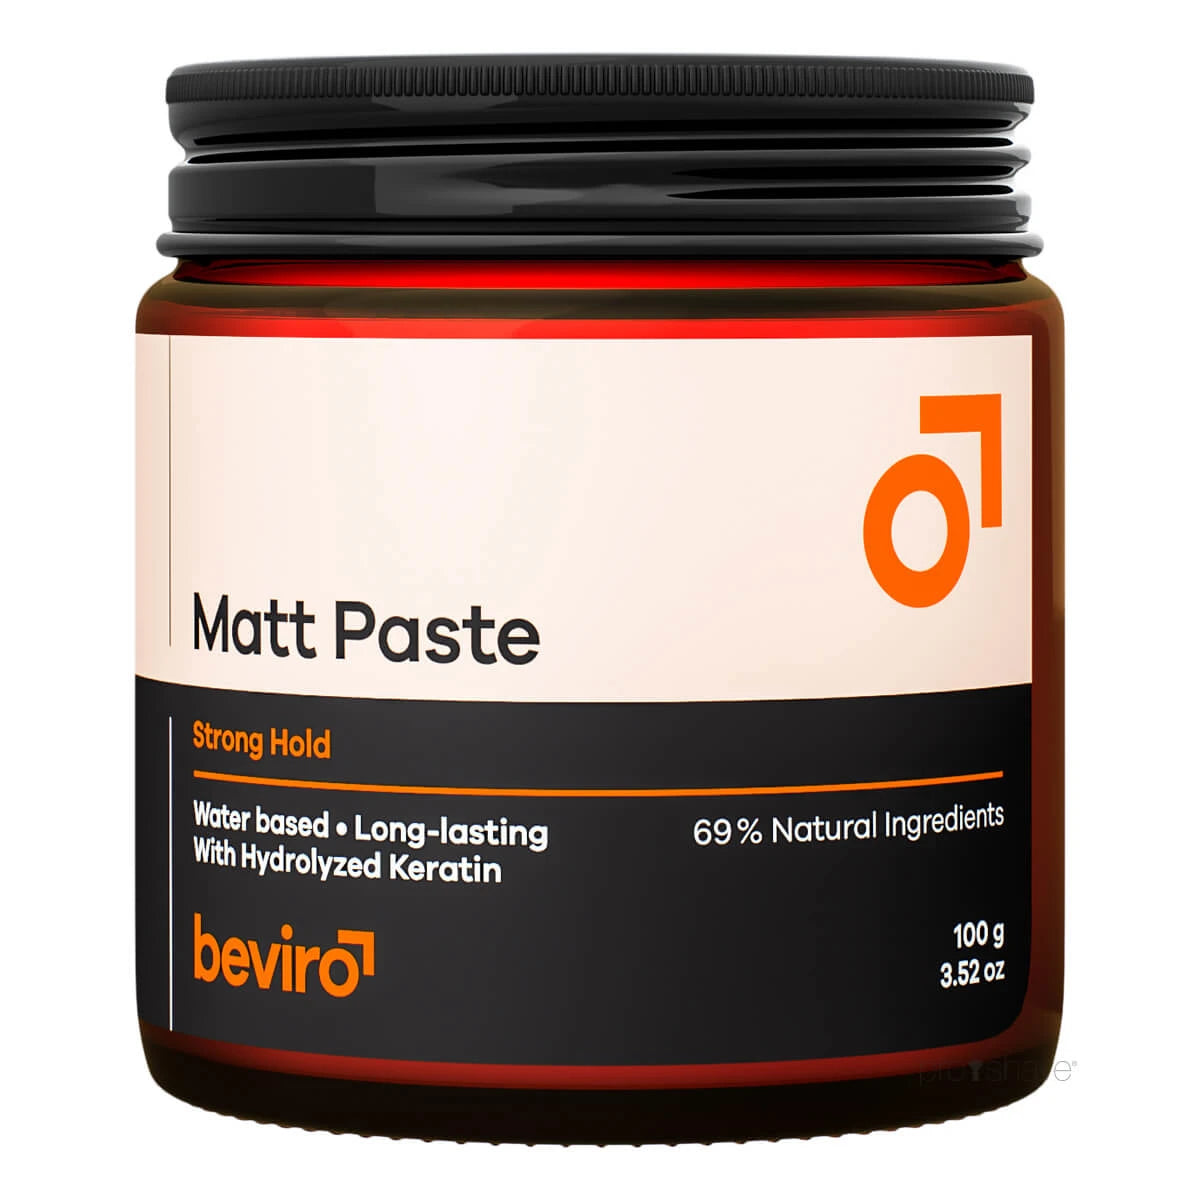 Beviro, Matt Paste- Strong Hold